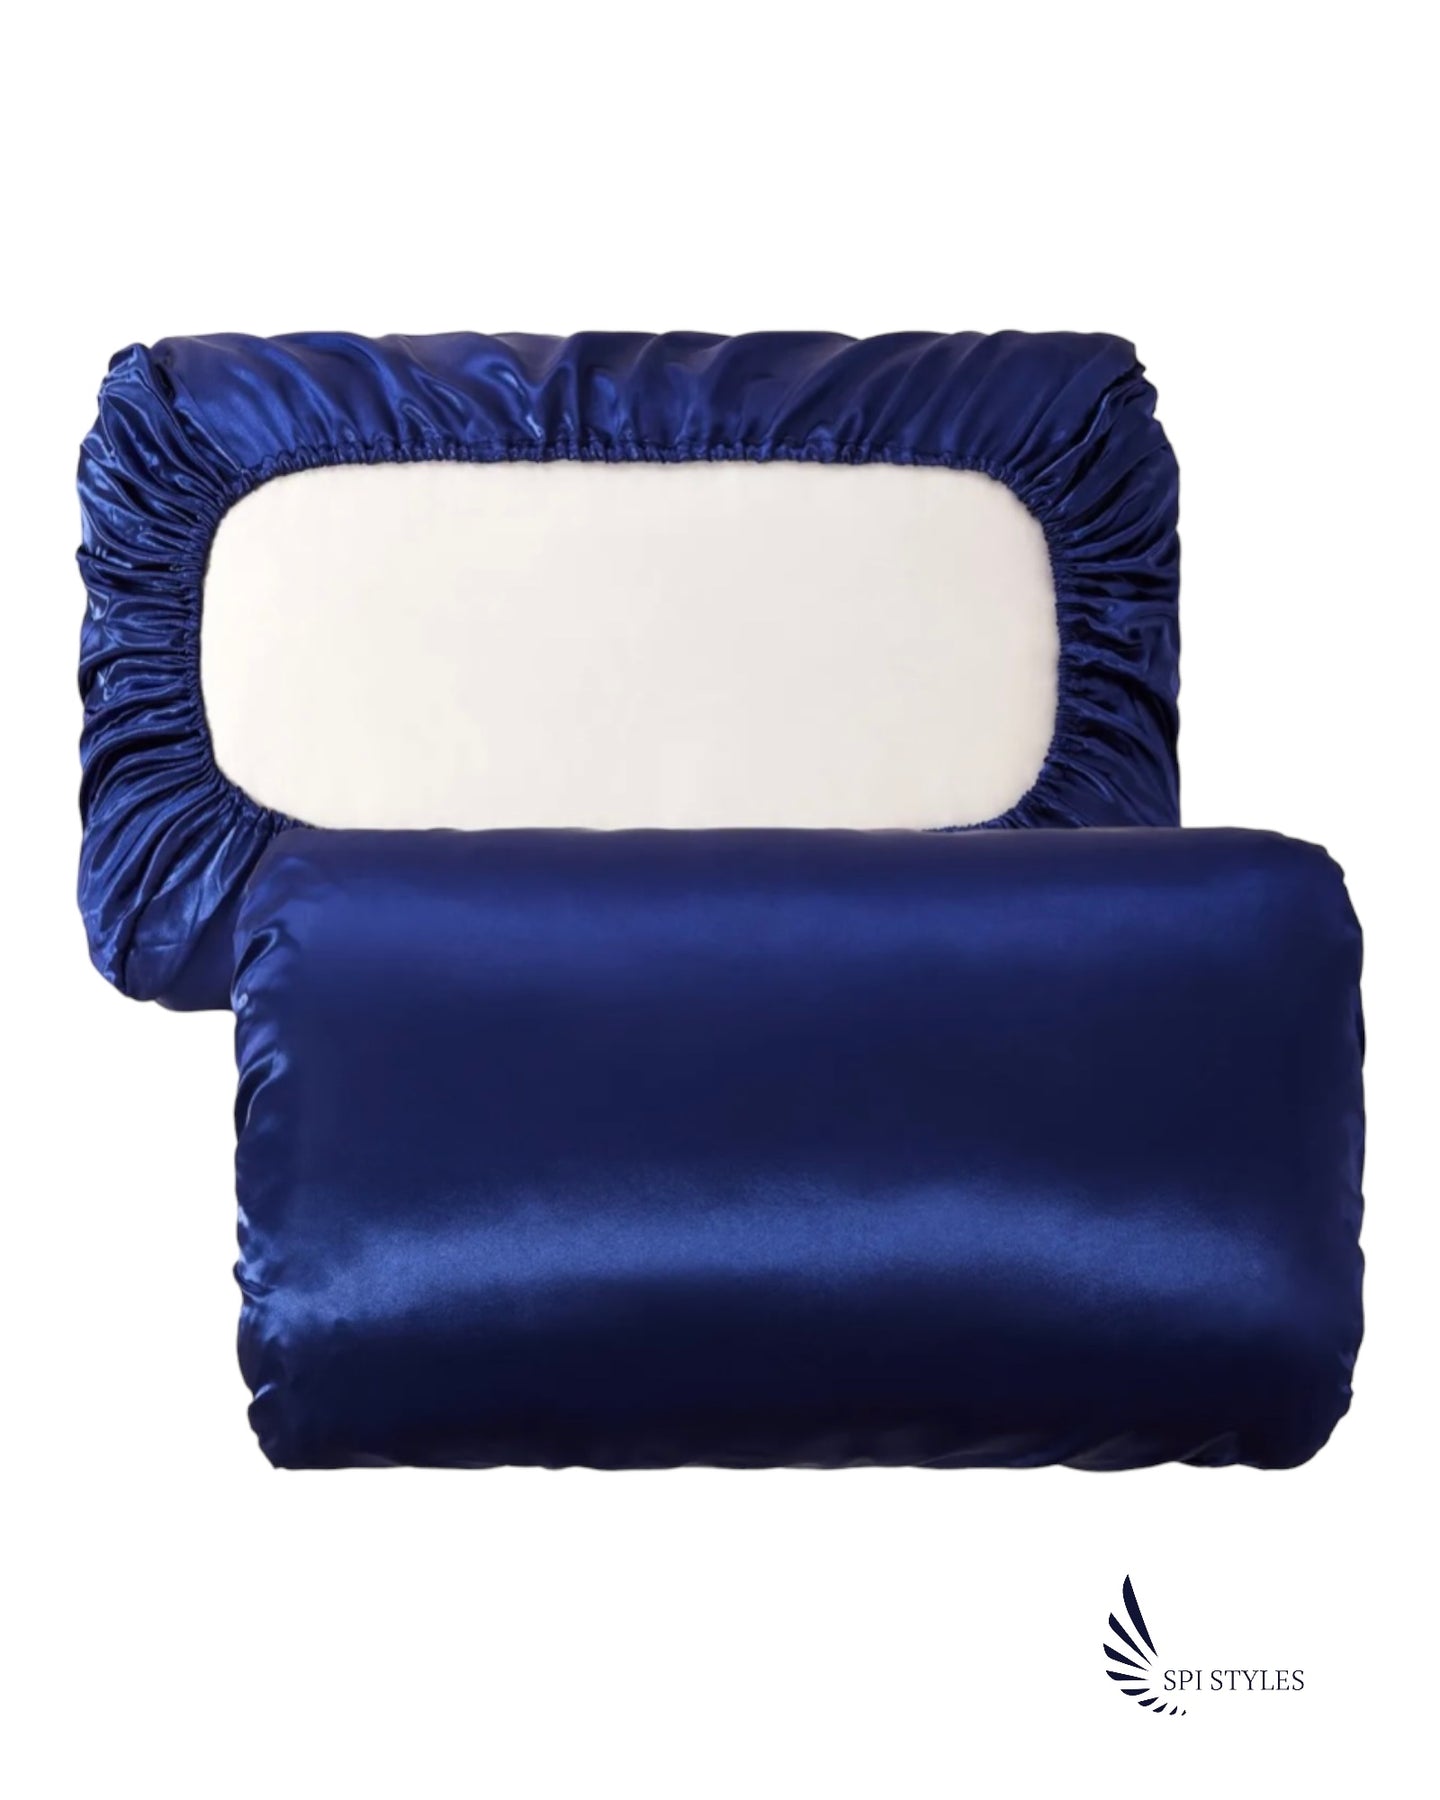 Satin Pillowcase with Elastic Cord (2 Pillowcases) Queen or King